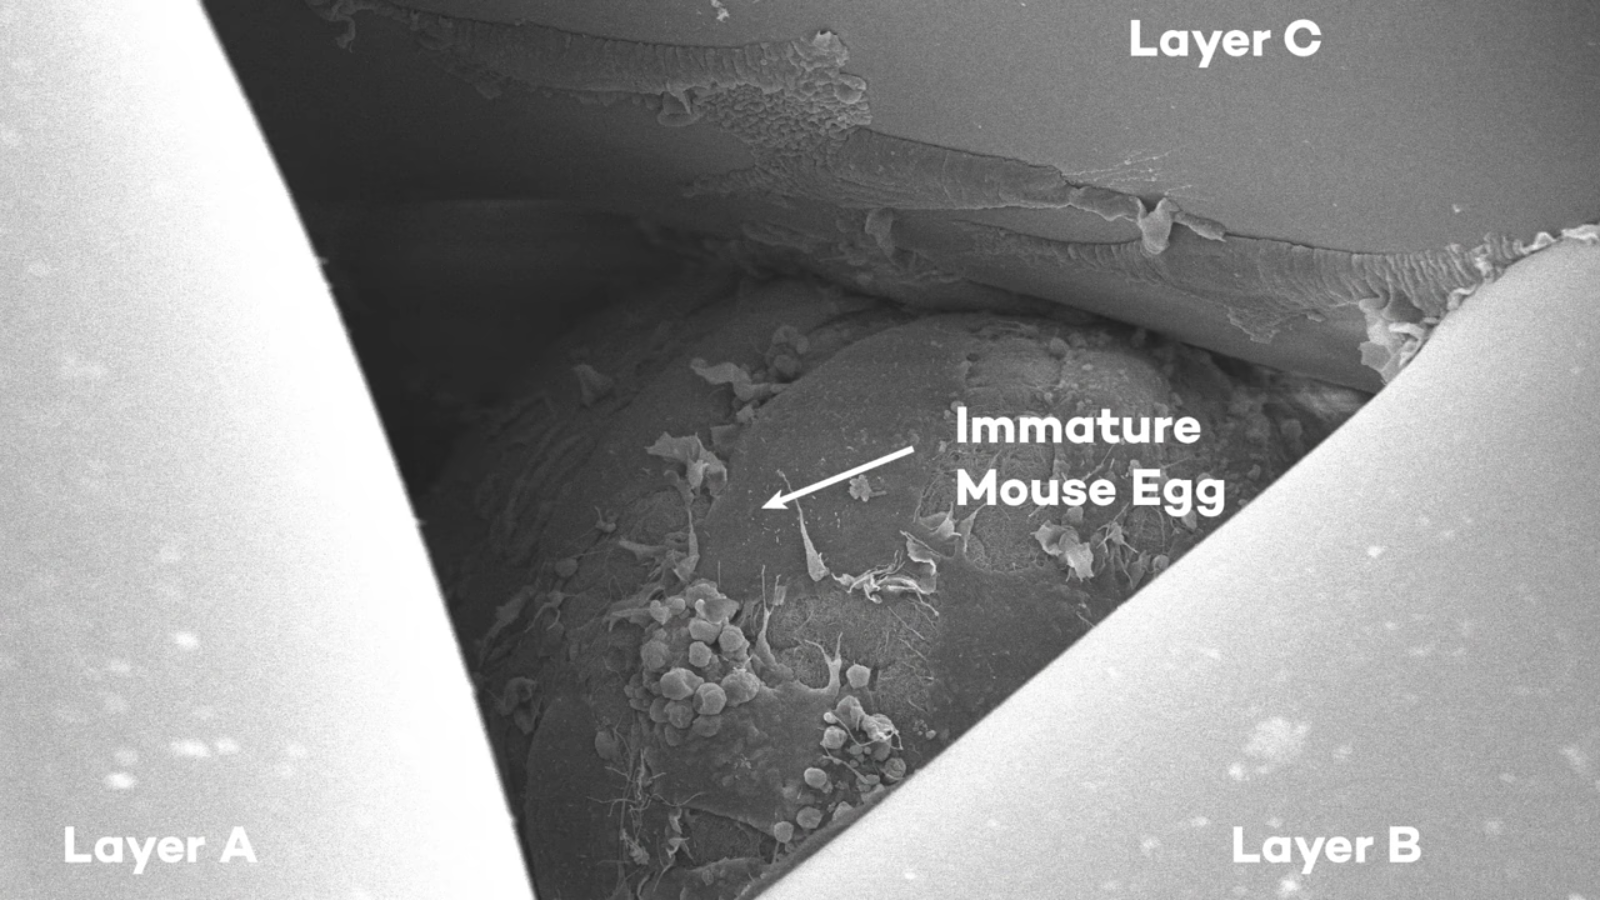 The mouse egg within layers of the gelatin scaffold. Image via Northwestern University.